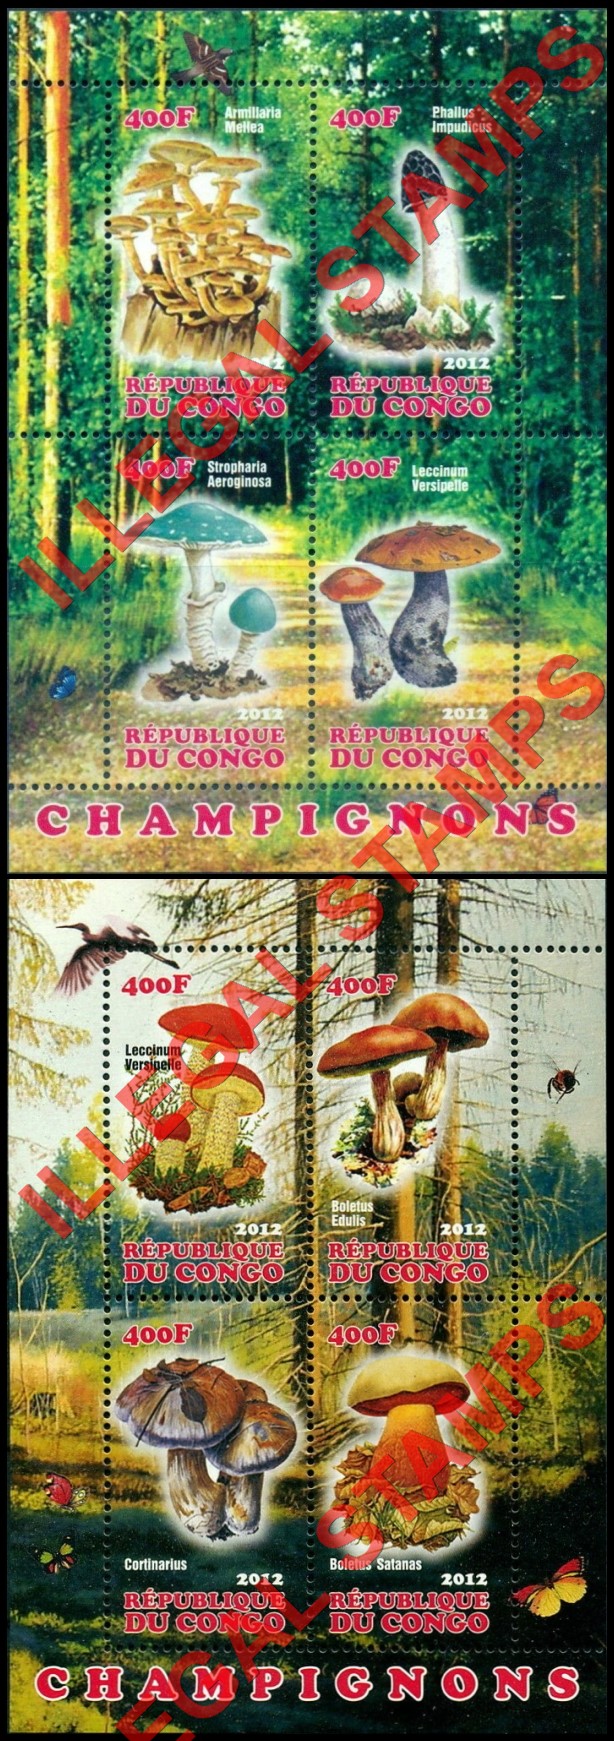 Congo Republic 2012 Mushrooms Illegal Stamp Souvenir Sheets of 4 (Part 1)